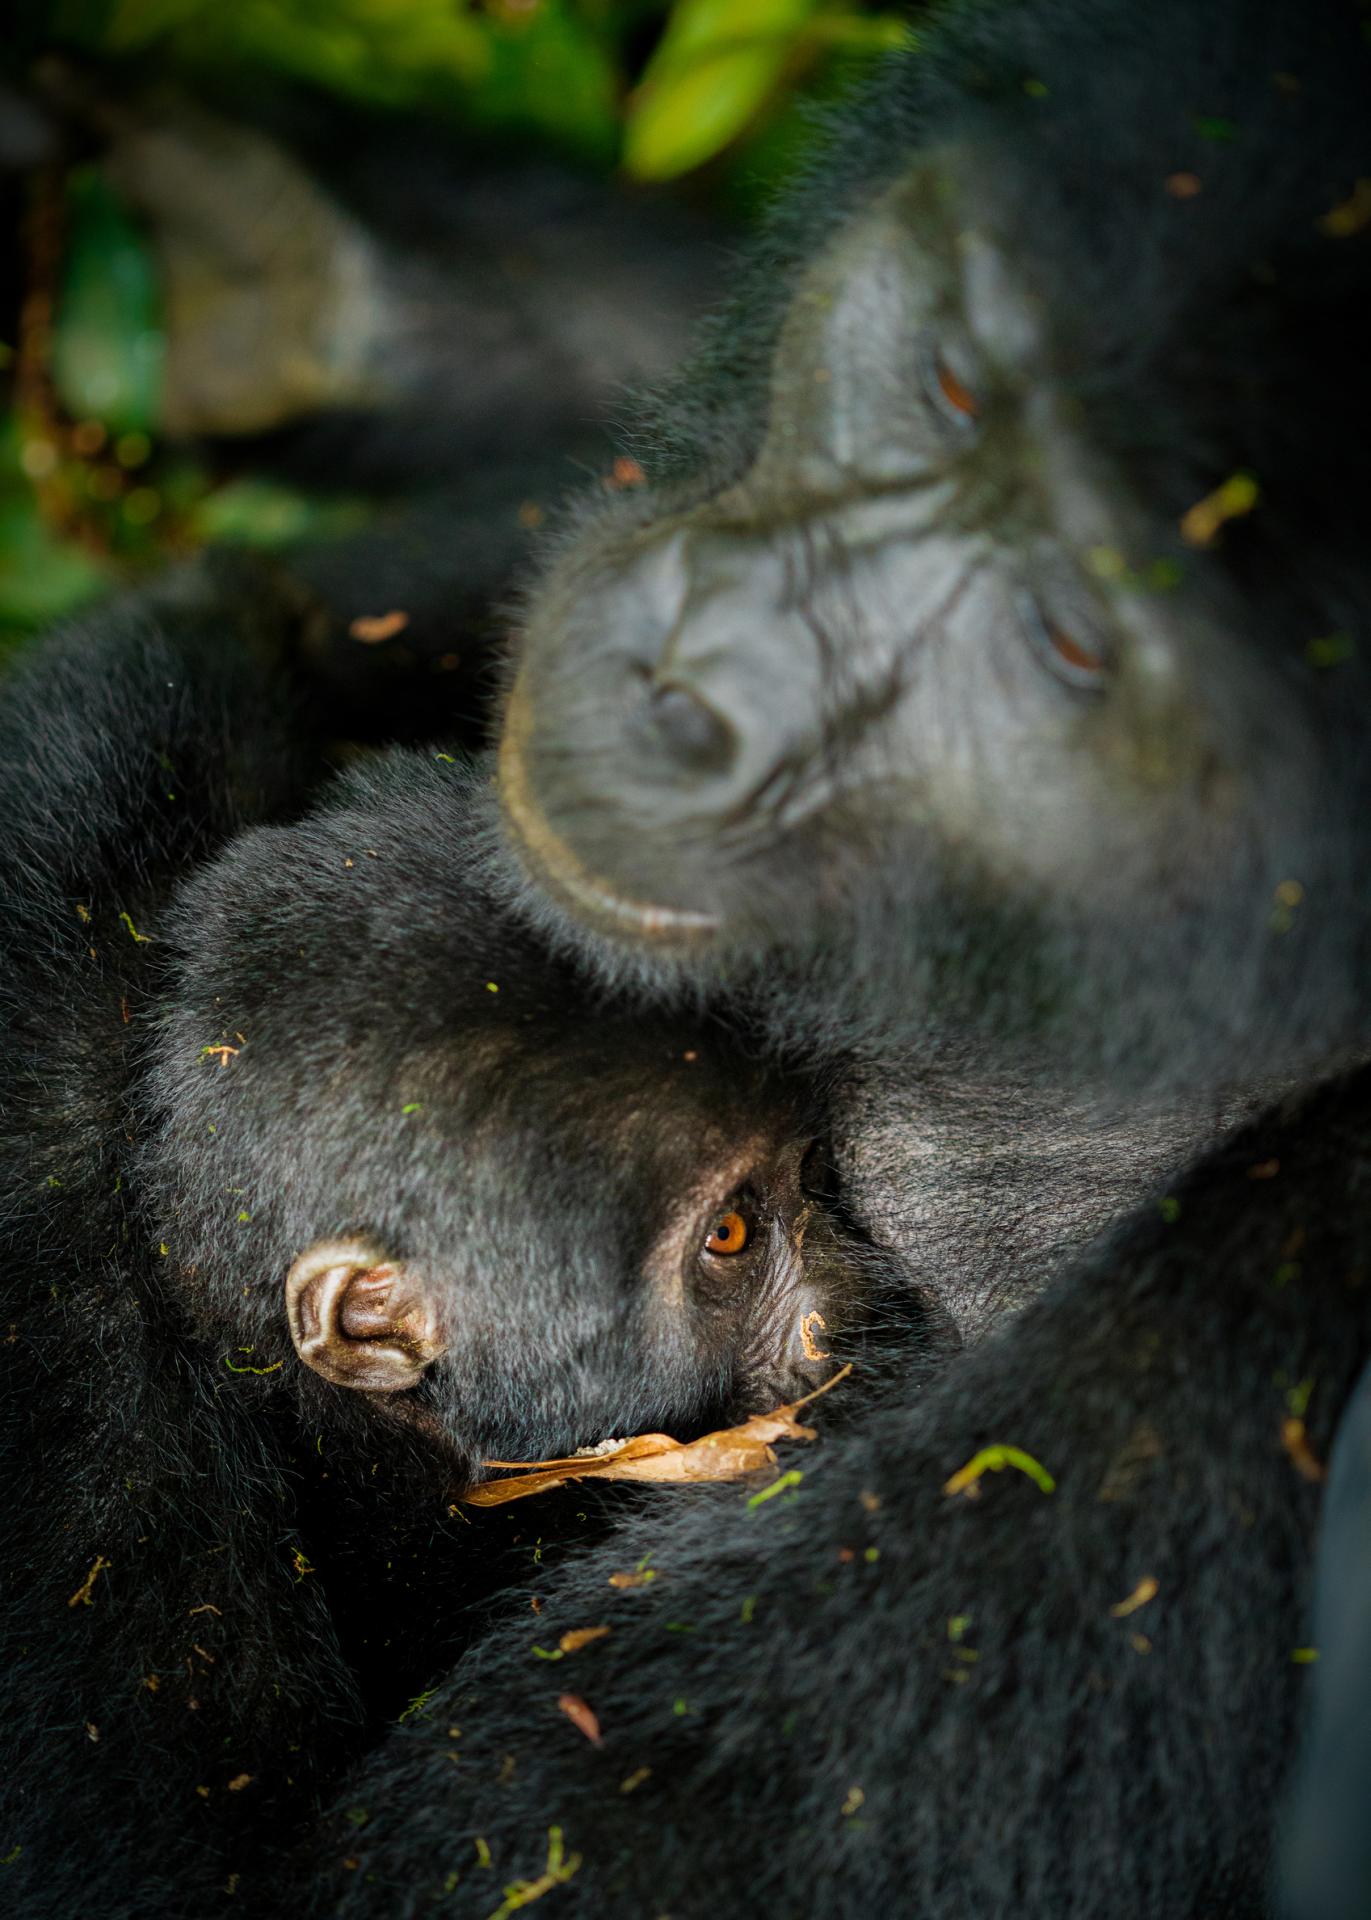 London Photography Awards Winner - Apes from Uganda